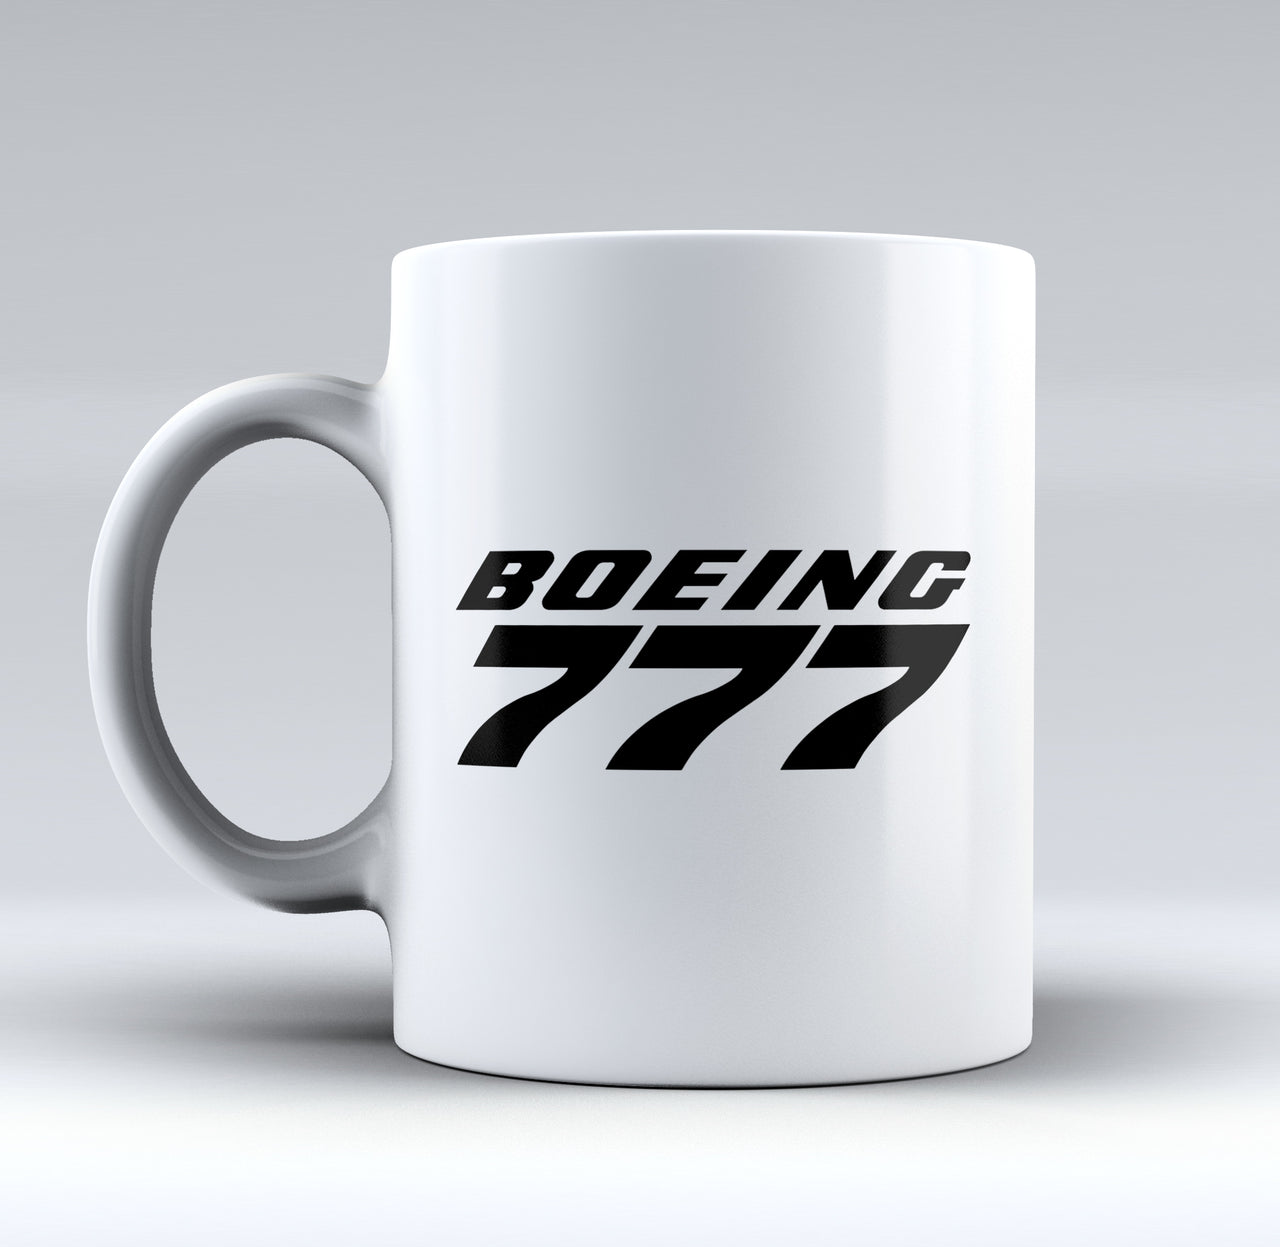 Boeing 777 & Text Designed Mugs